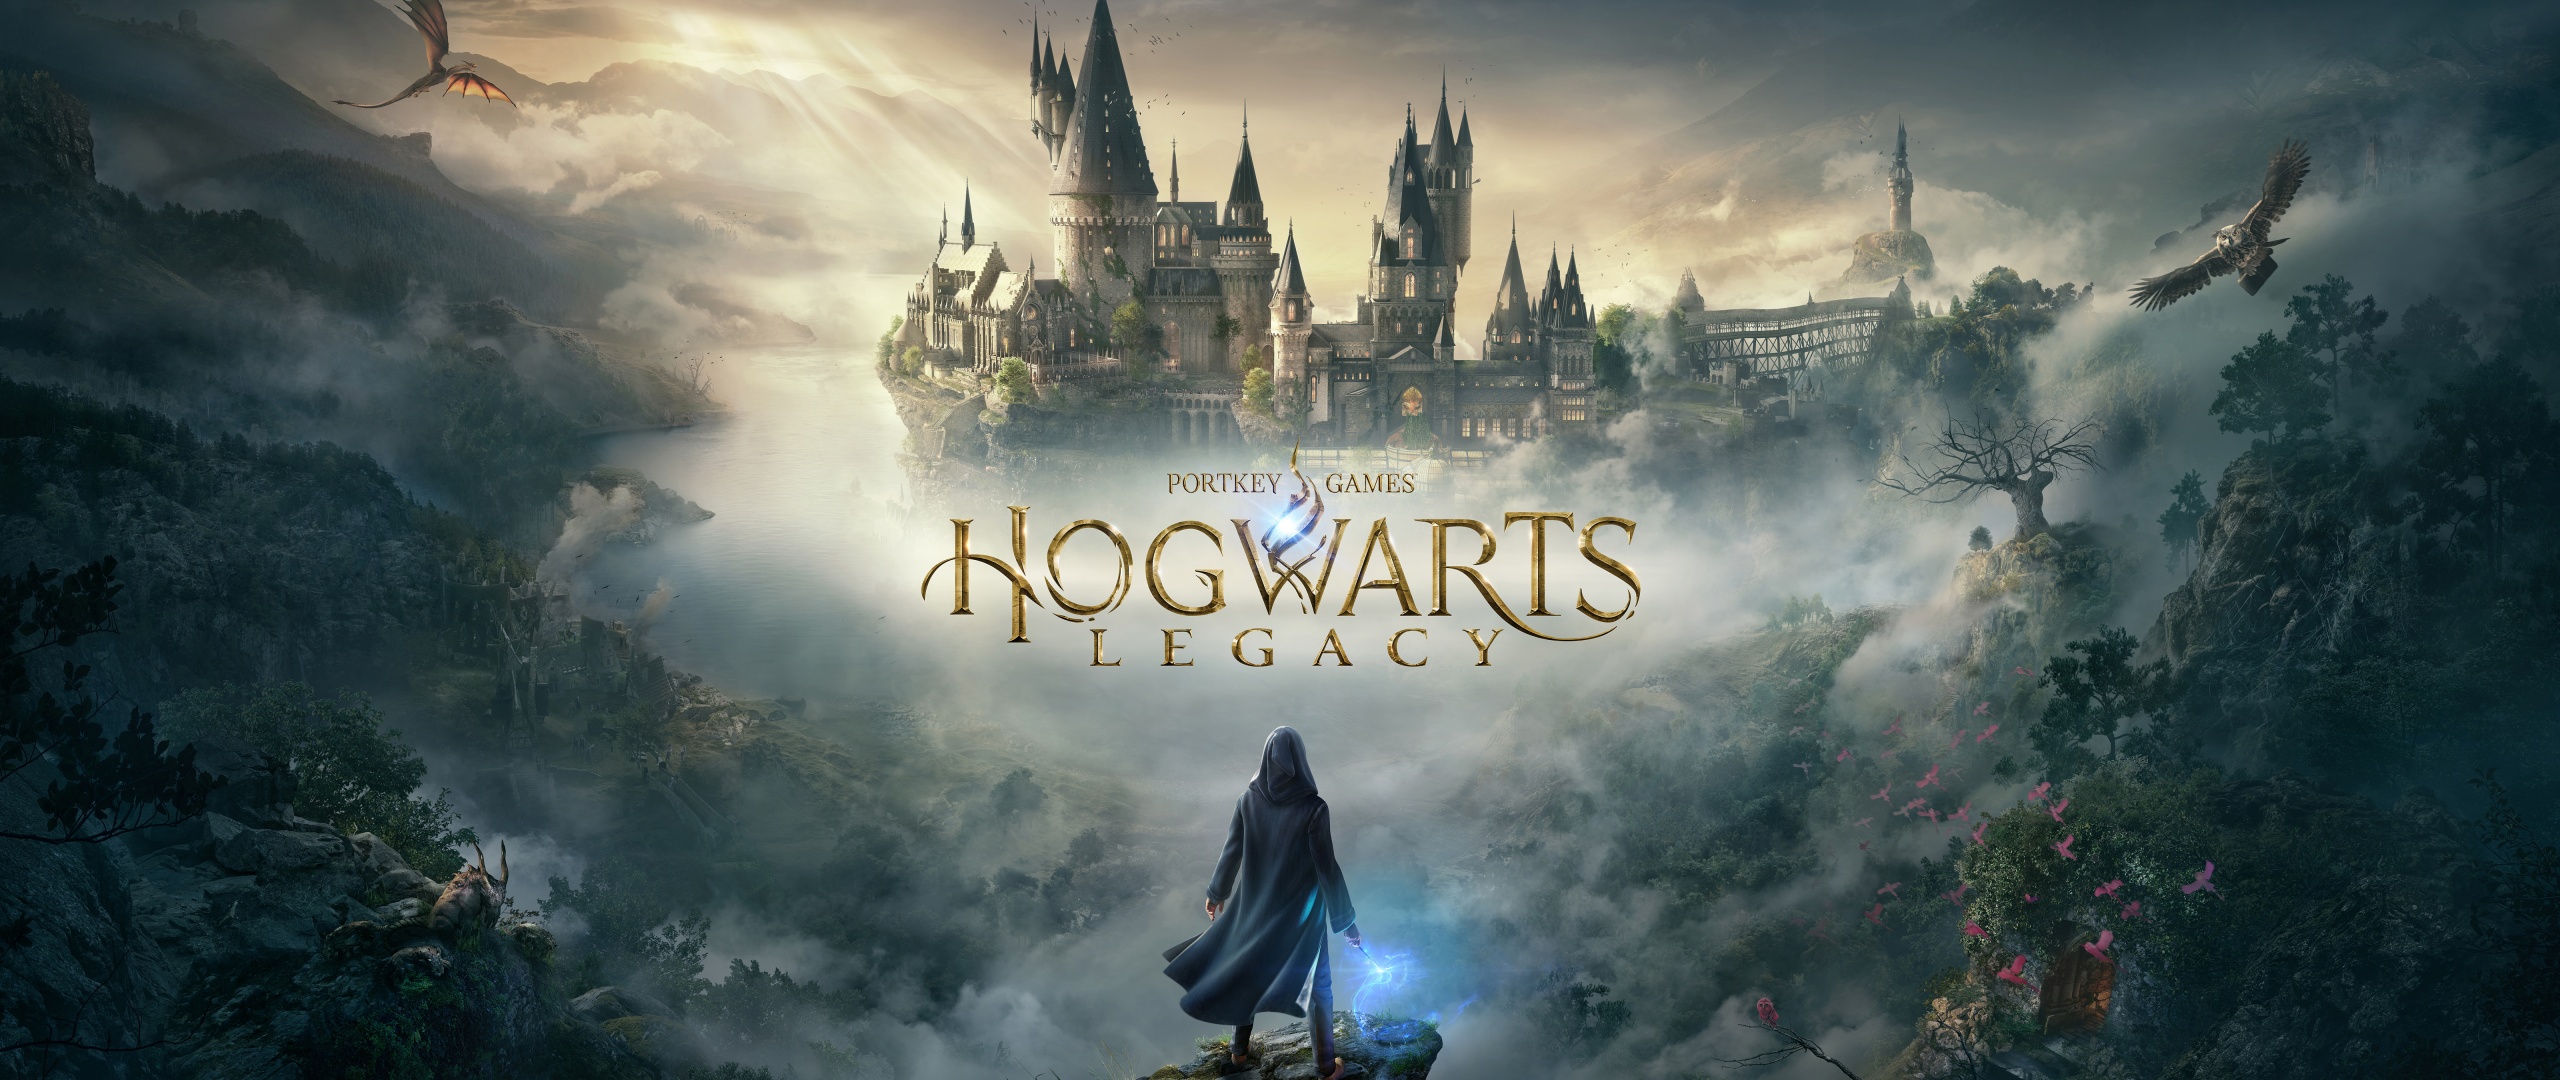 Hogwarts Legacy Wallpaper 4K, PC Games, PlayStation 4, PlayStation 5